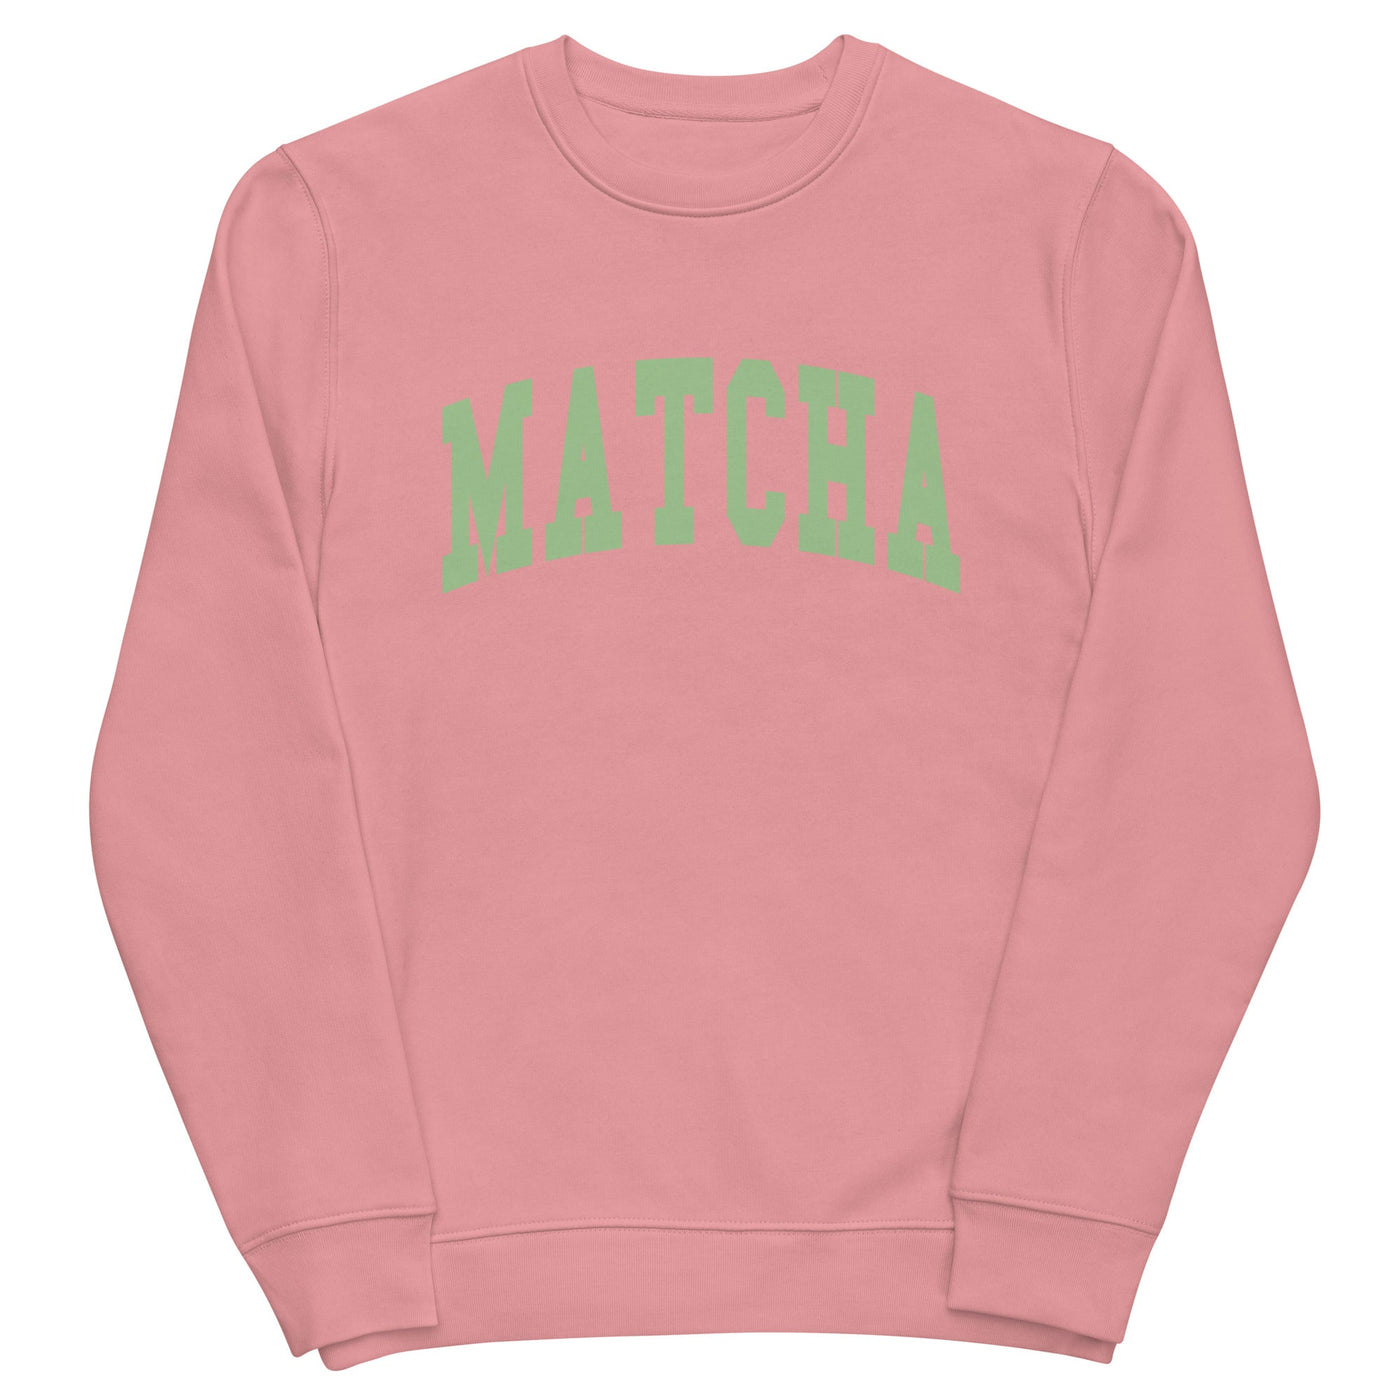 Matcha - Organic Sweatshirt